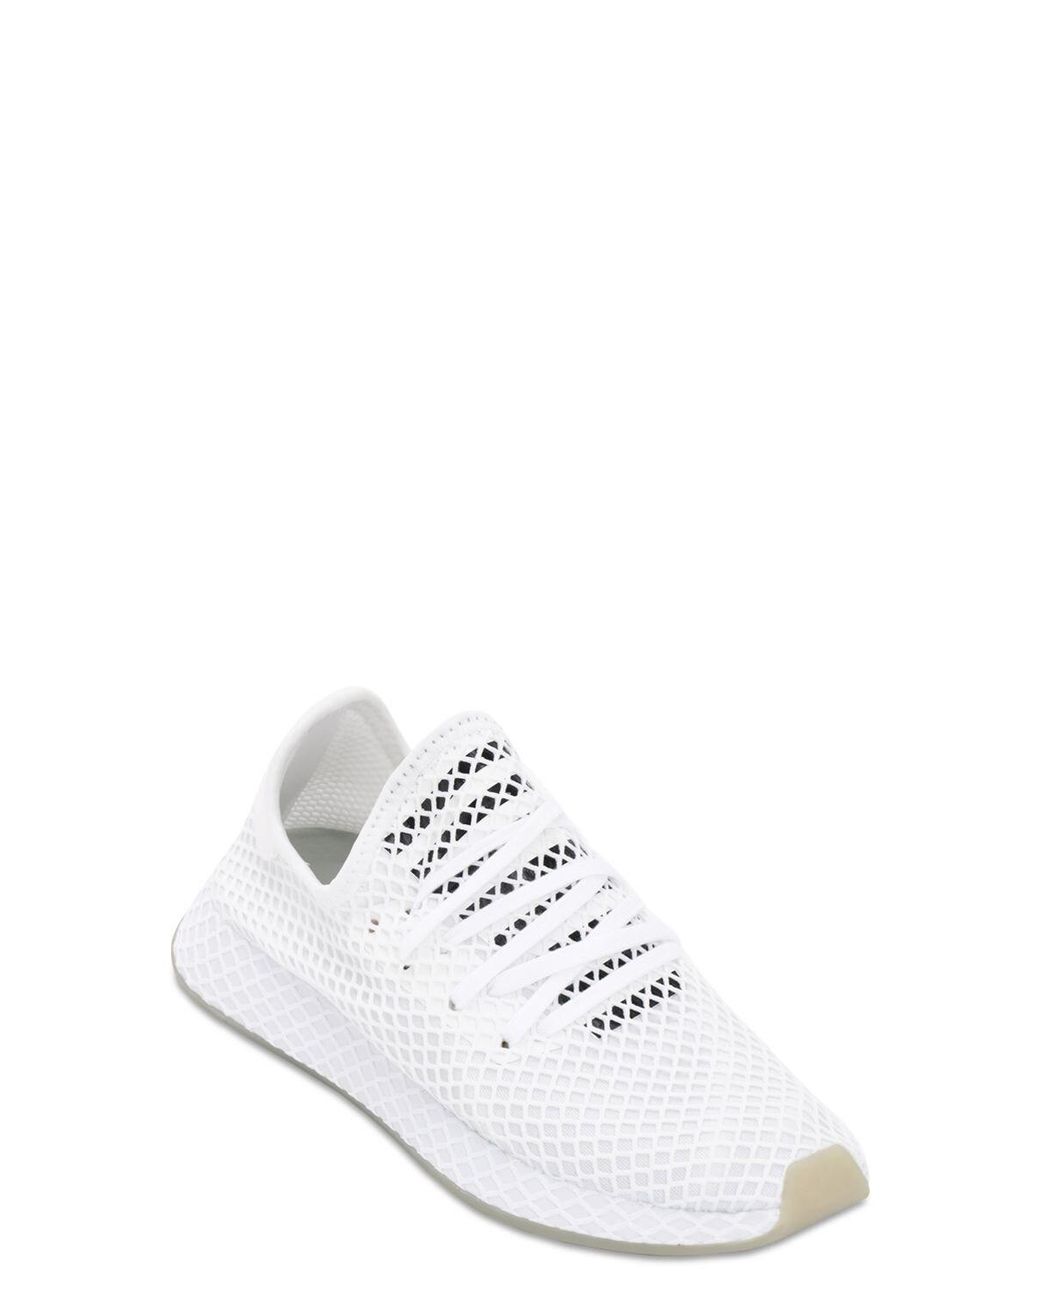 adidas Originals Deerupt Mesh Socks Sneakers in White | Lyst